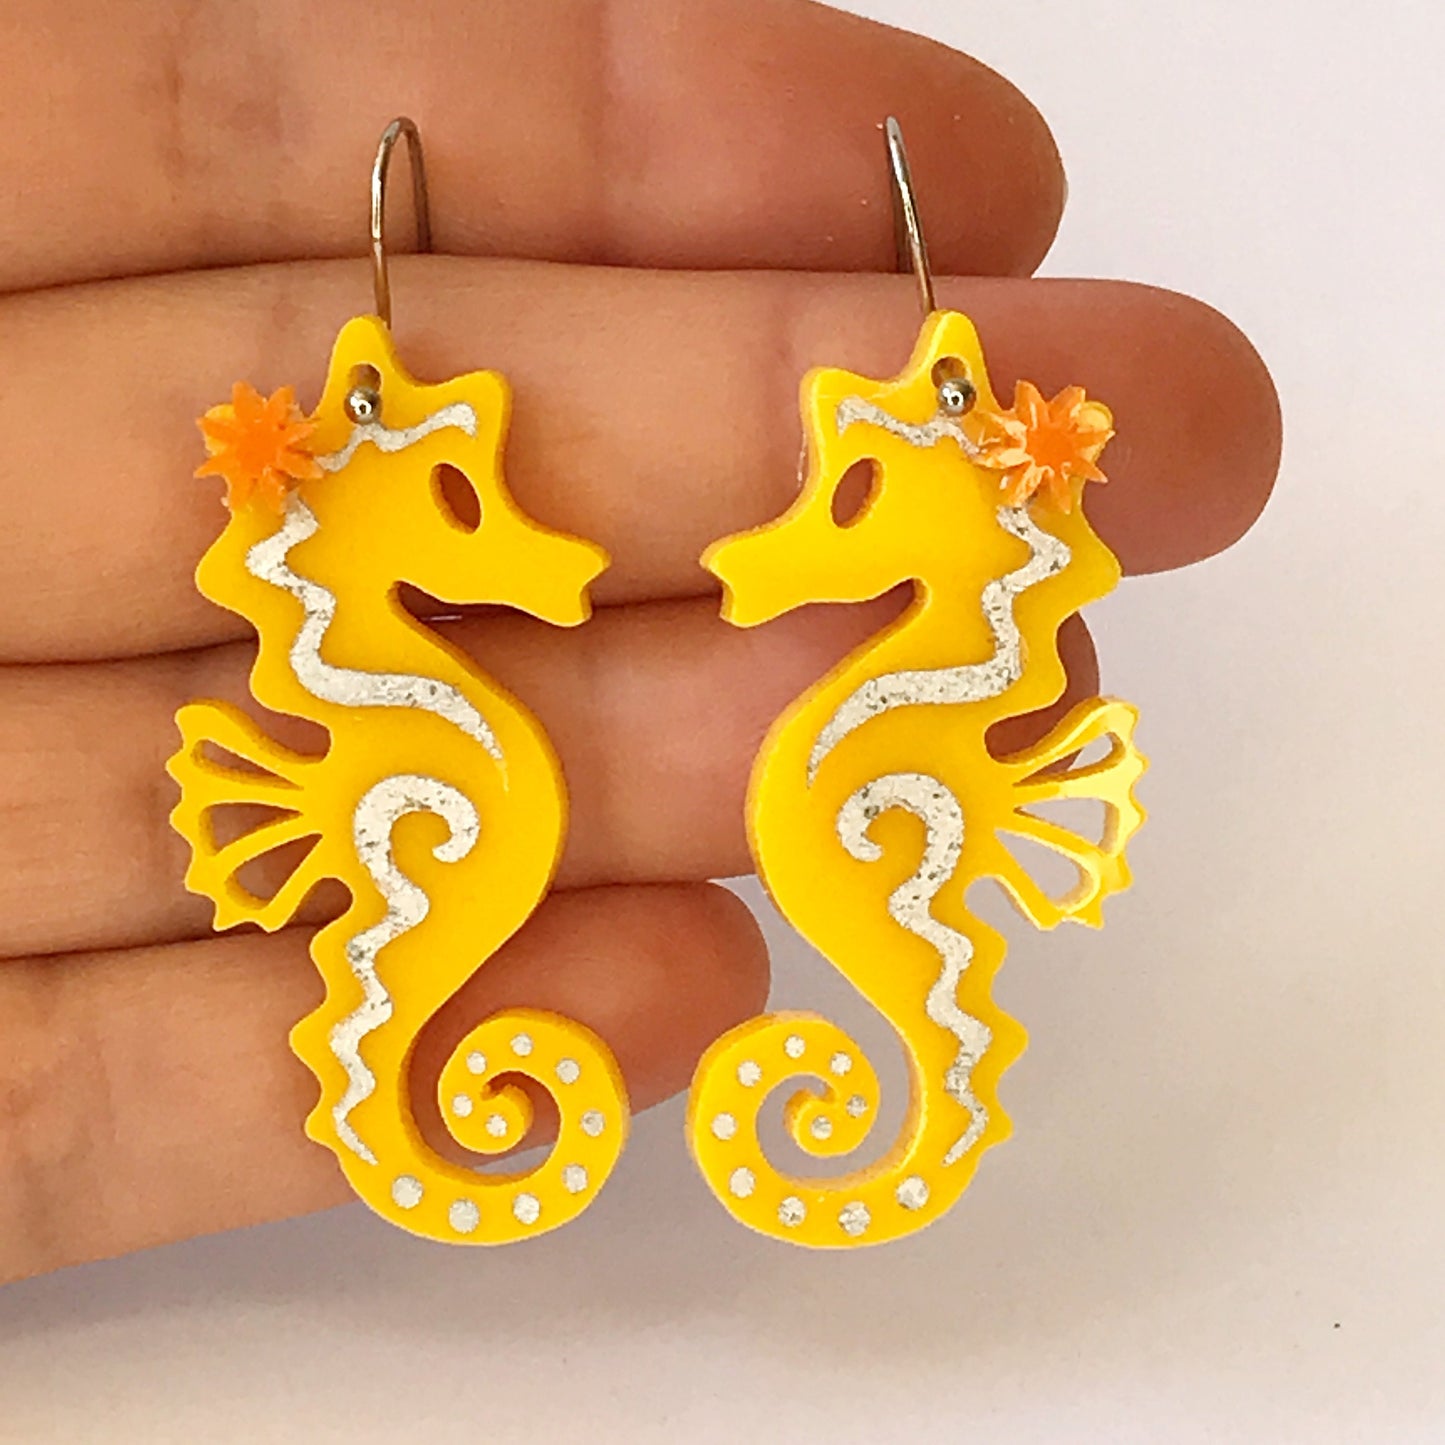 Seahorse Earrings - laser cut acrylic - yellow